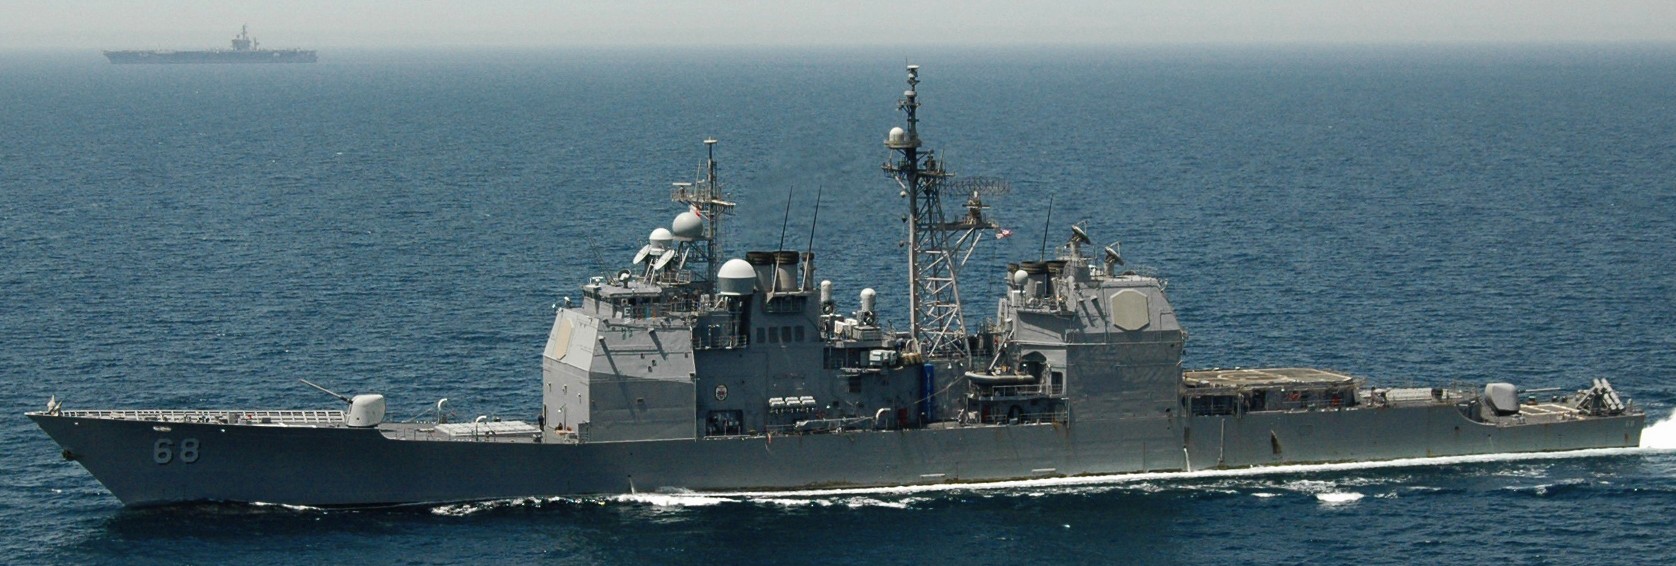 cg-68 uss anzio ticonderoga class guided missile cruiser aegis us navy persian gulf 17